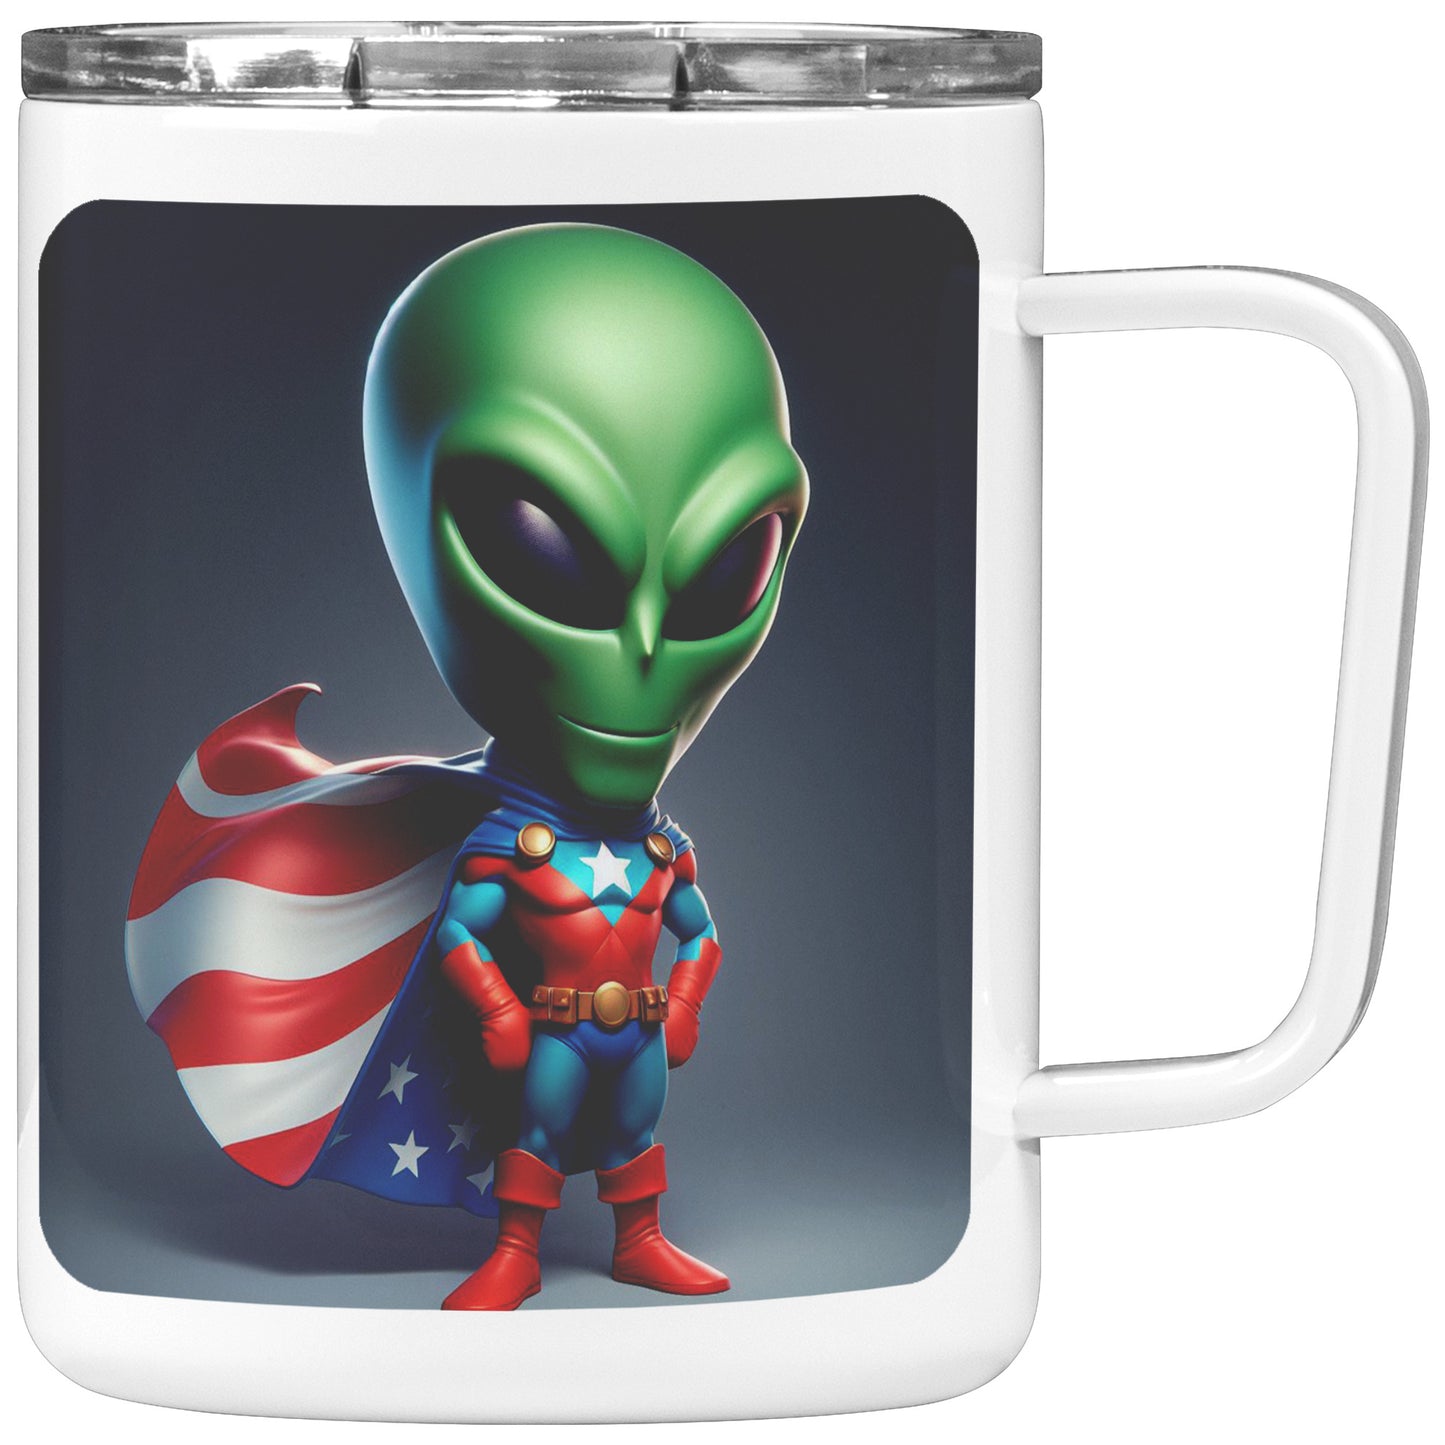 Martian Alien Caricature - Coffee Mug #7